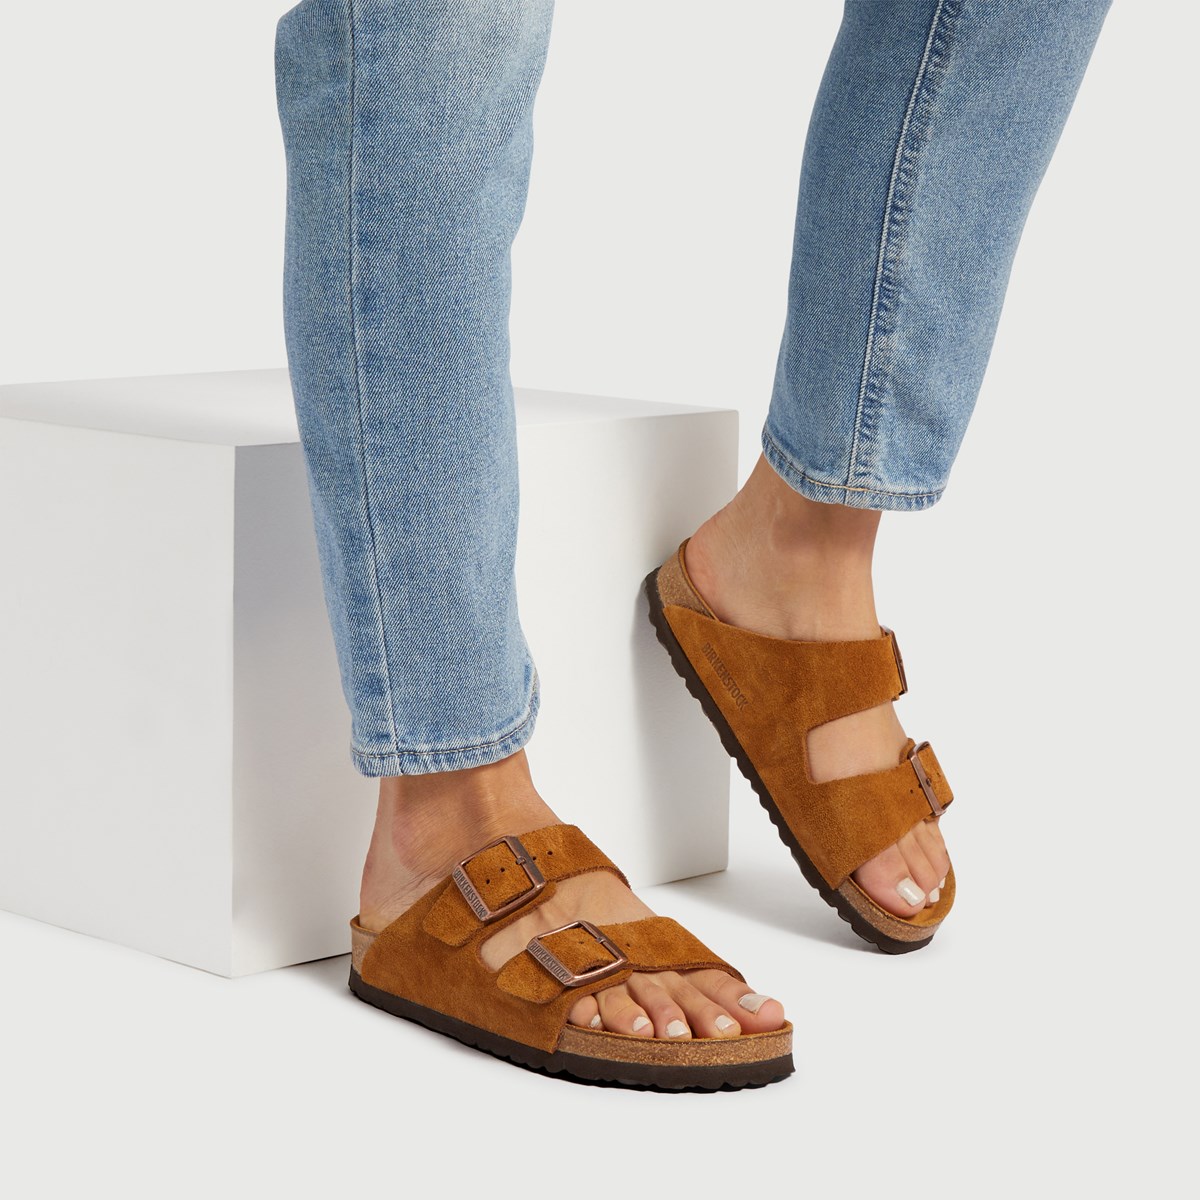 birkenstock arizona soft footbed suede leather sandals